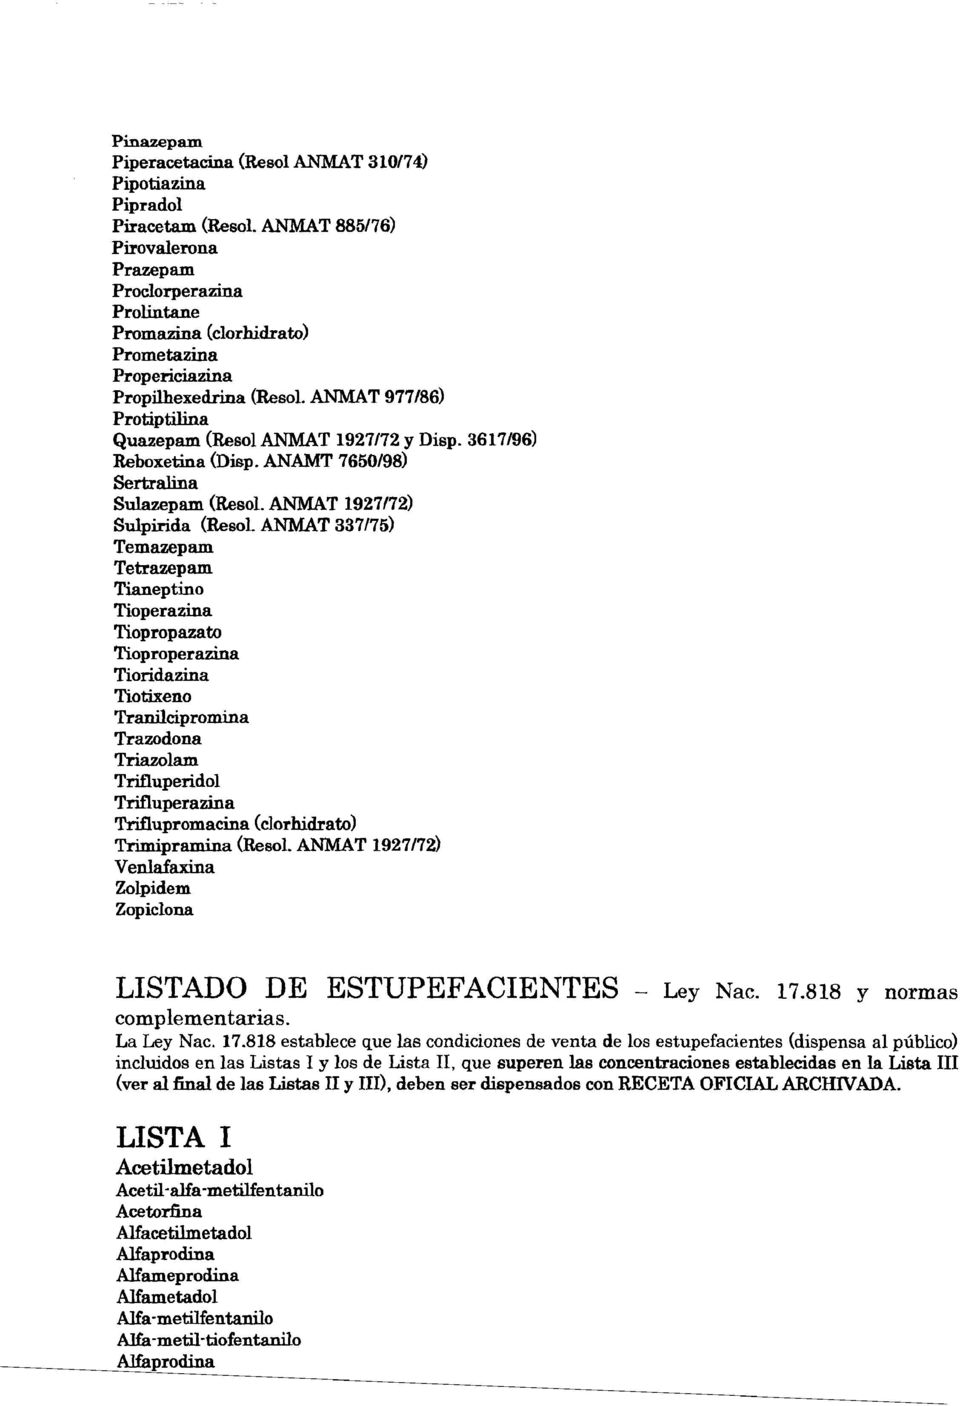 ANMAT 977/86) Protiptilina Quazepam (ResolANMAT 1927172 y Disp. 3617/96) Reboxetina (Disp. ANAMT 7650/98) Sertralina Sulazepam (Resol. ANMAT 1927172) Sulpirida (Re80l.